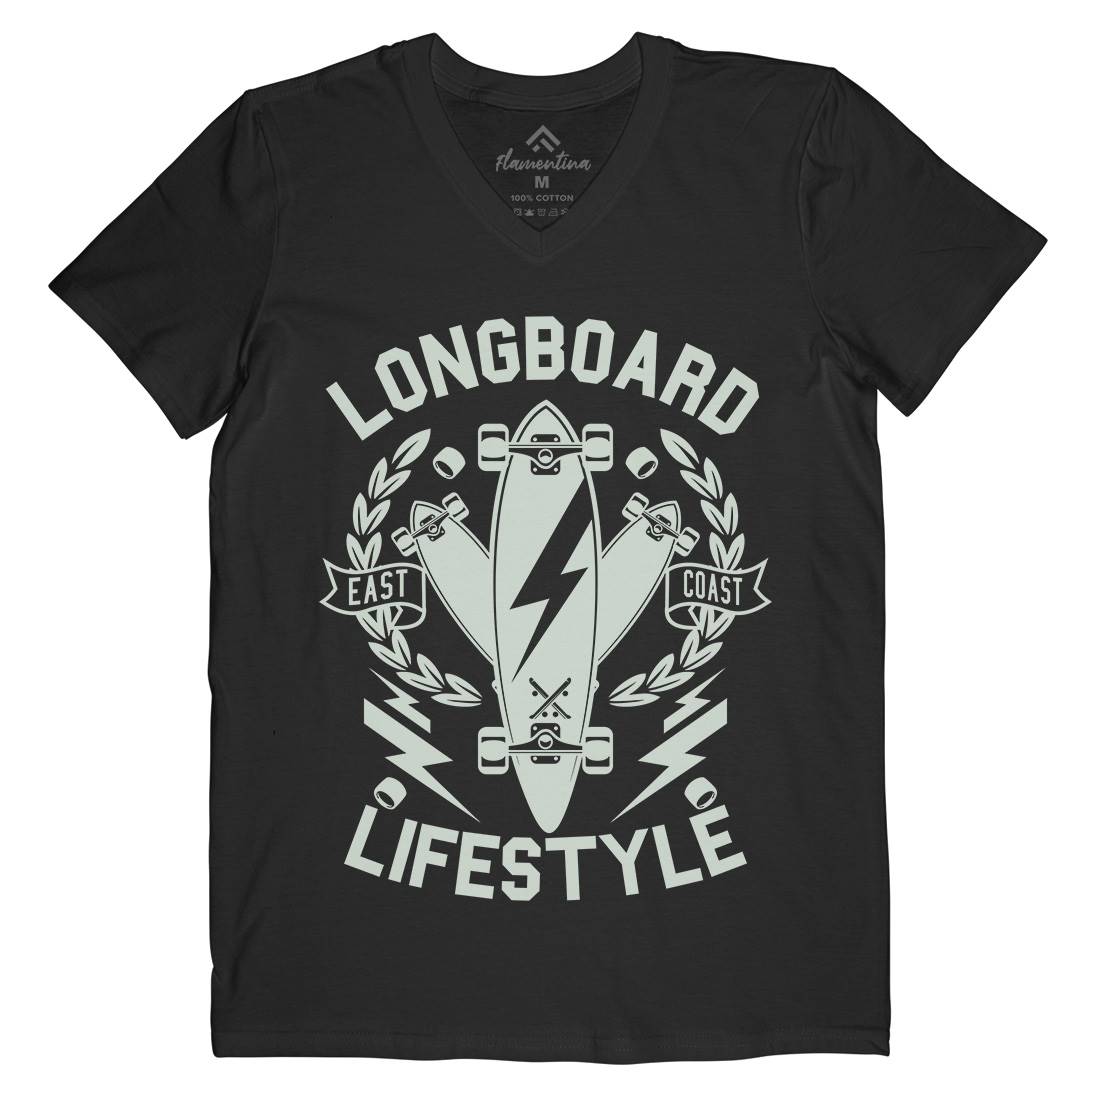 Longboard Lifestyle Mens V-Neck T-Shirt Skate A251